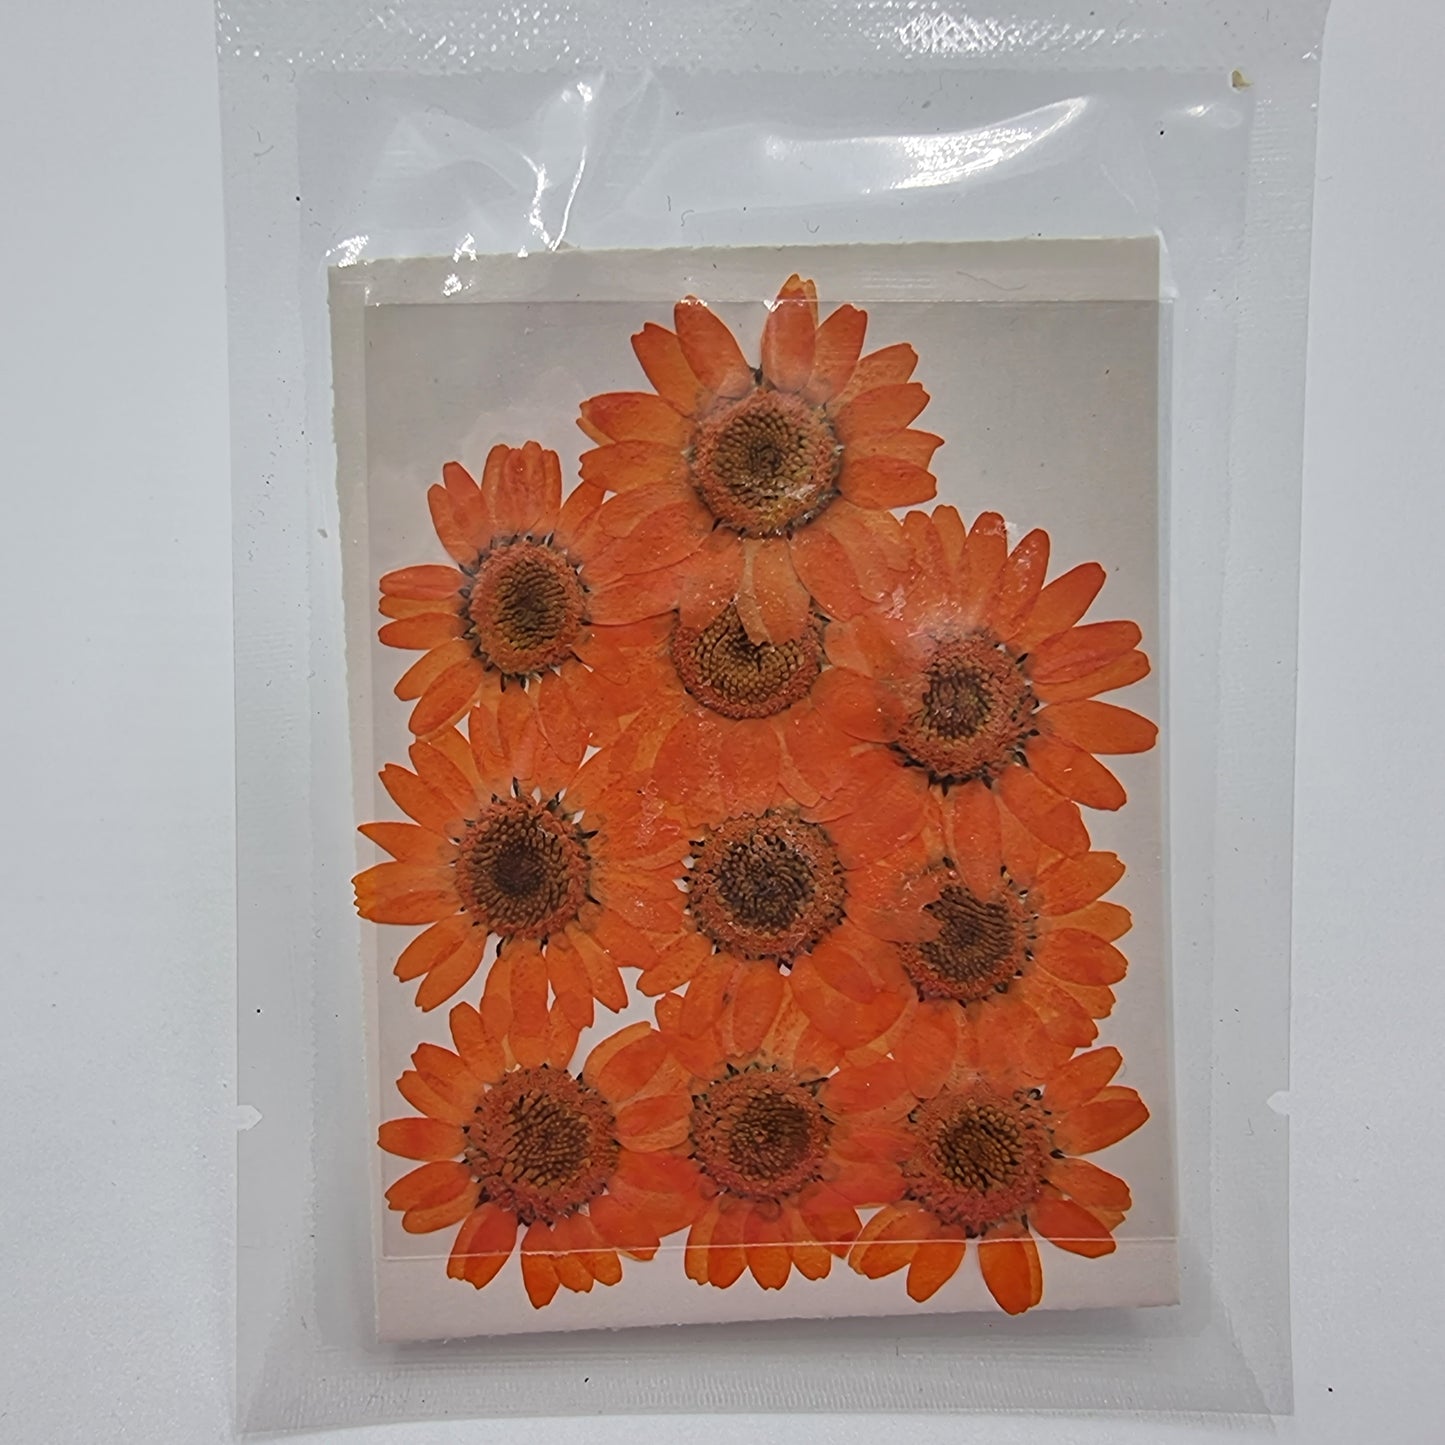 Dried Pressed Flowers - Orange Daisies Small - Mystic Art Glitters